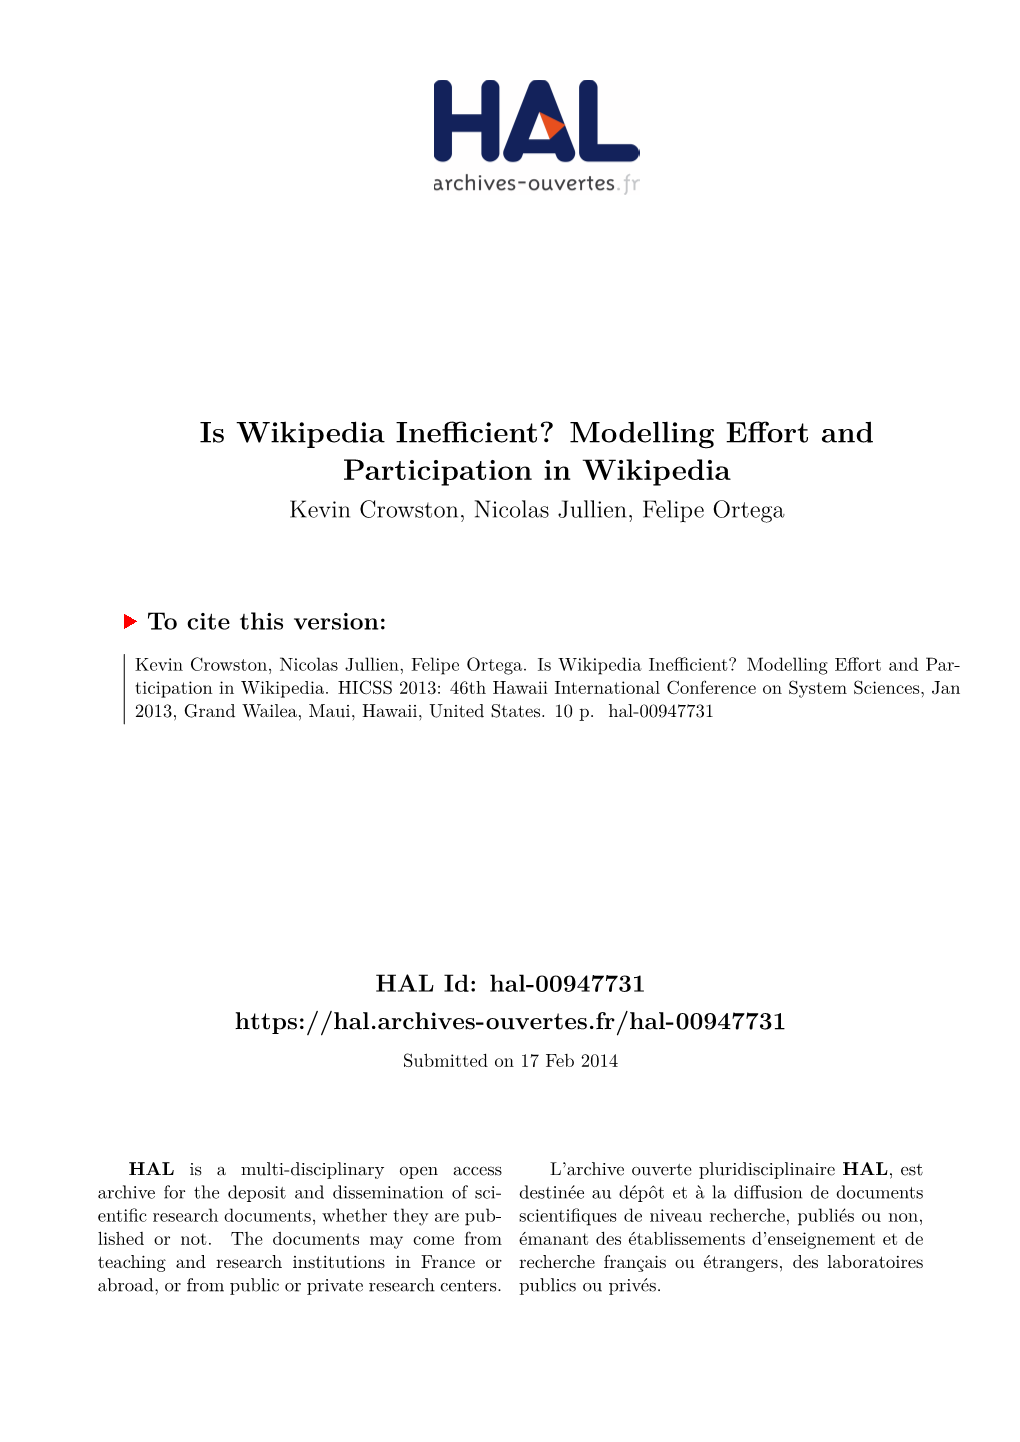 Modelling Effort and Participation in Wikipedia Kevin Crowston, Nicolas Jullien, Felipe Ortega